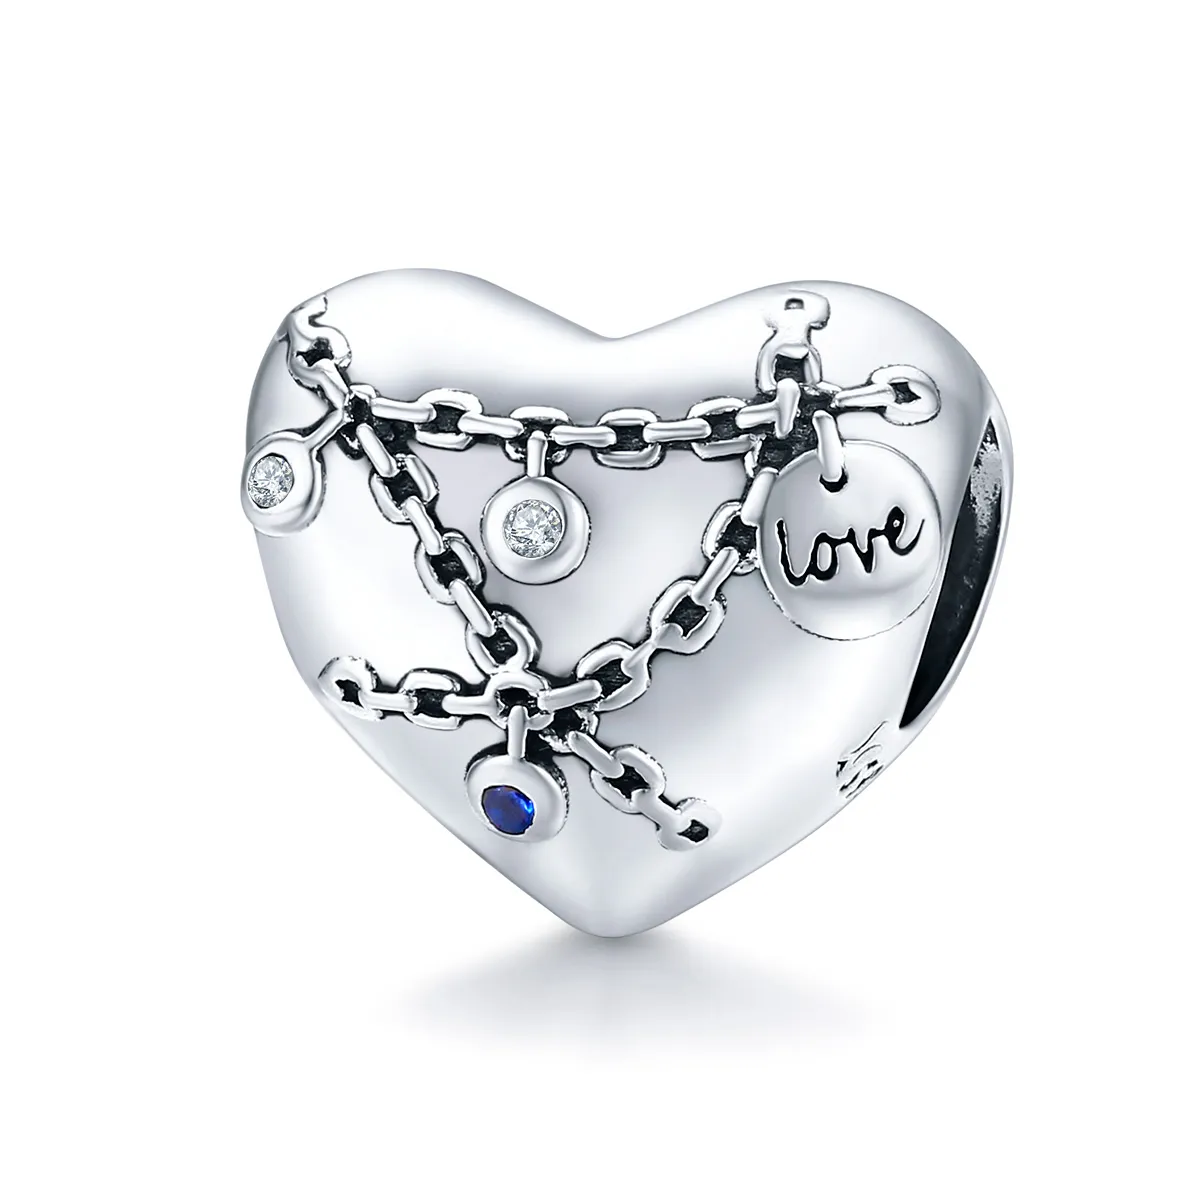 Pandora Stil Inimă Cuișoare Charm - SCC1538